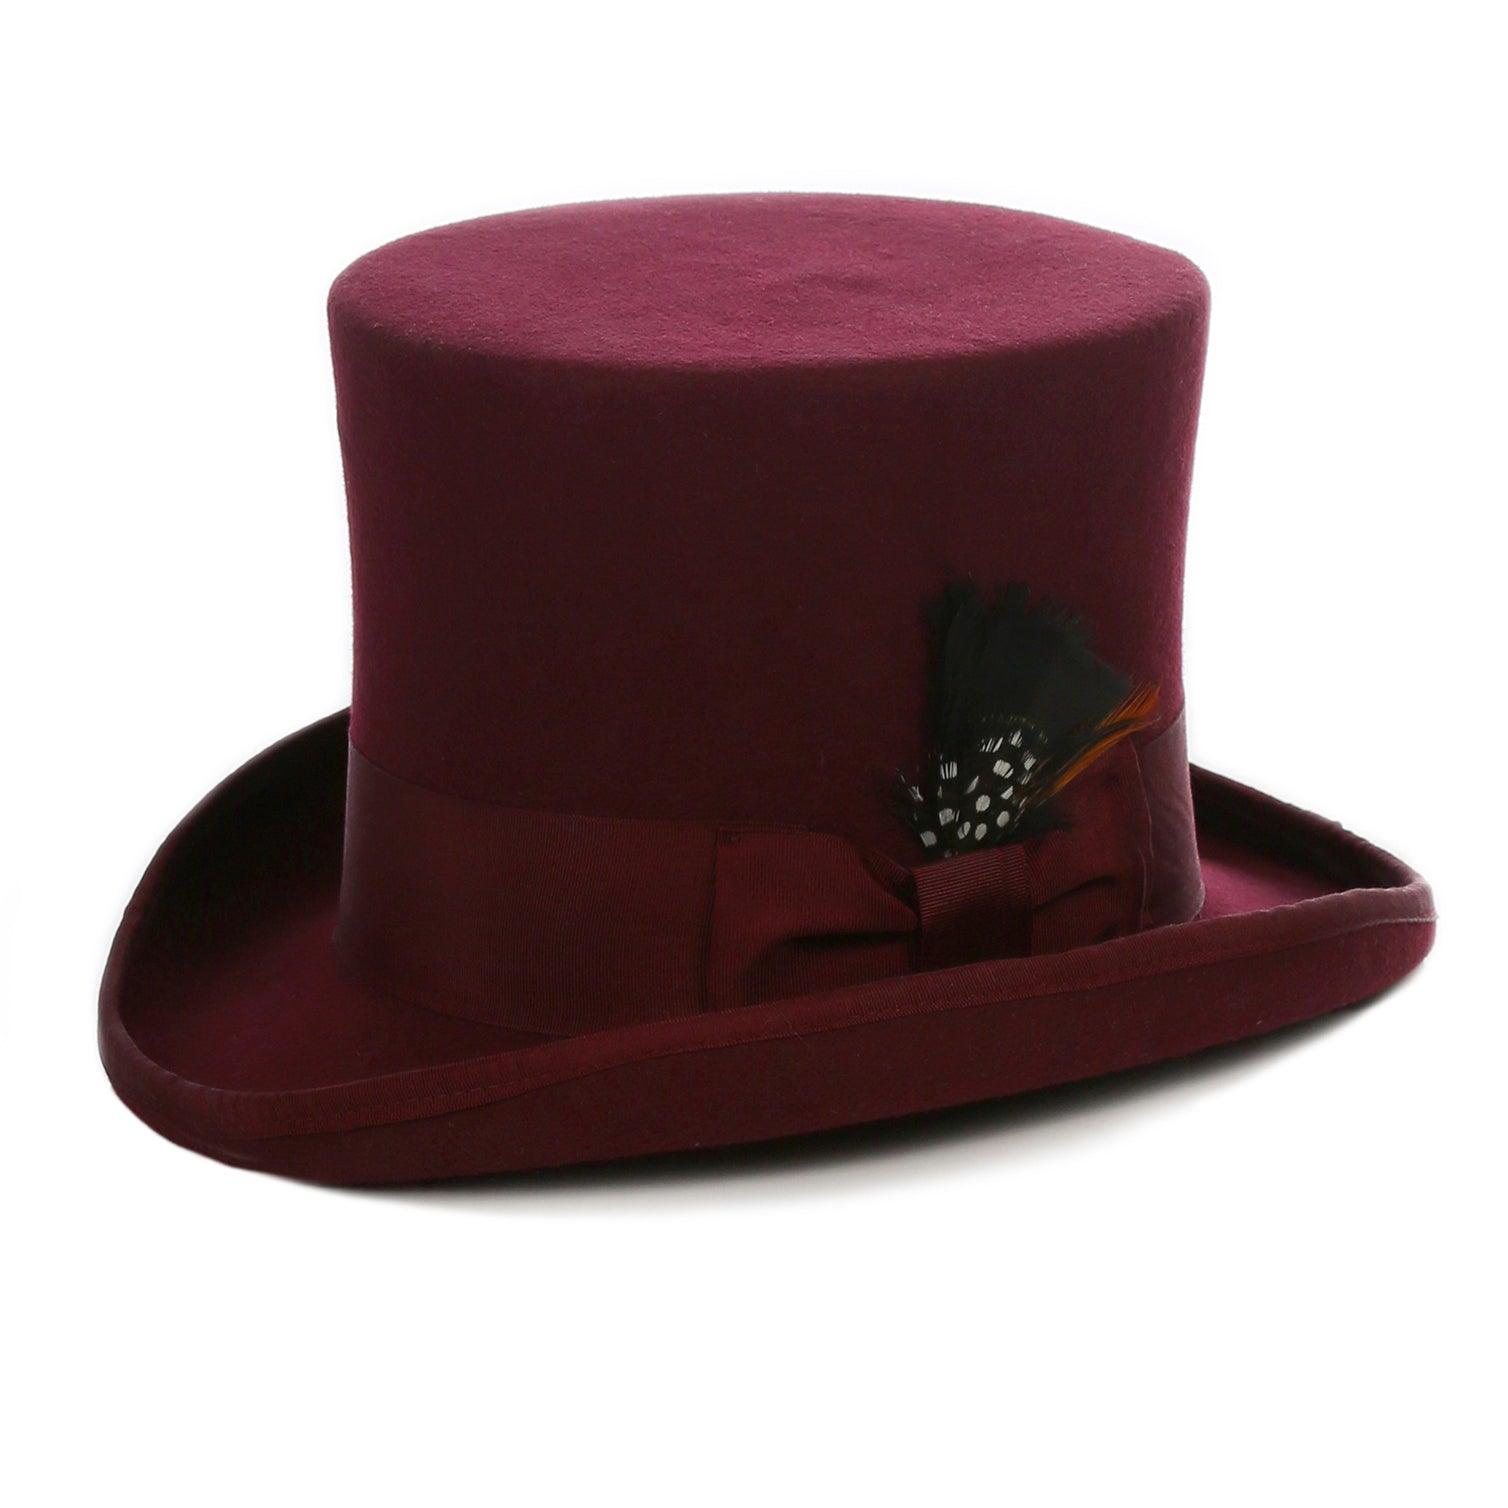 Men's Burgundy Top Hat | Mad Hatter Hat | Steampunk Hat | Ferrecci Small